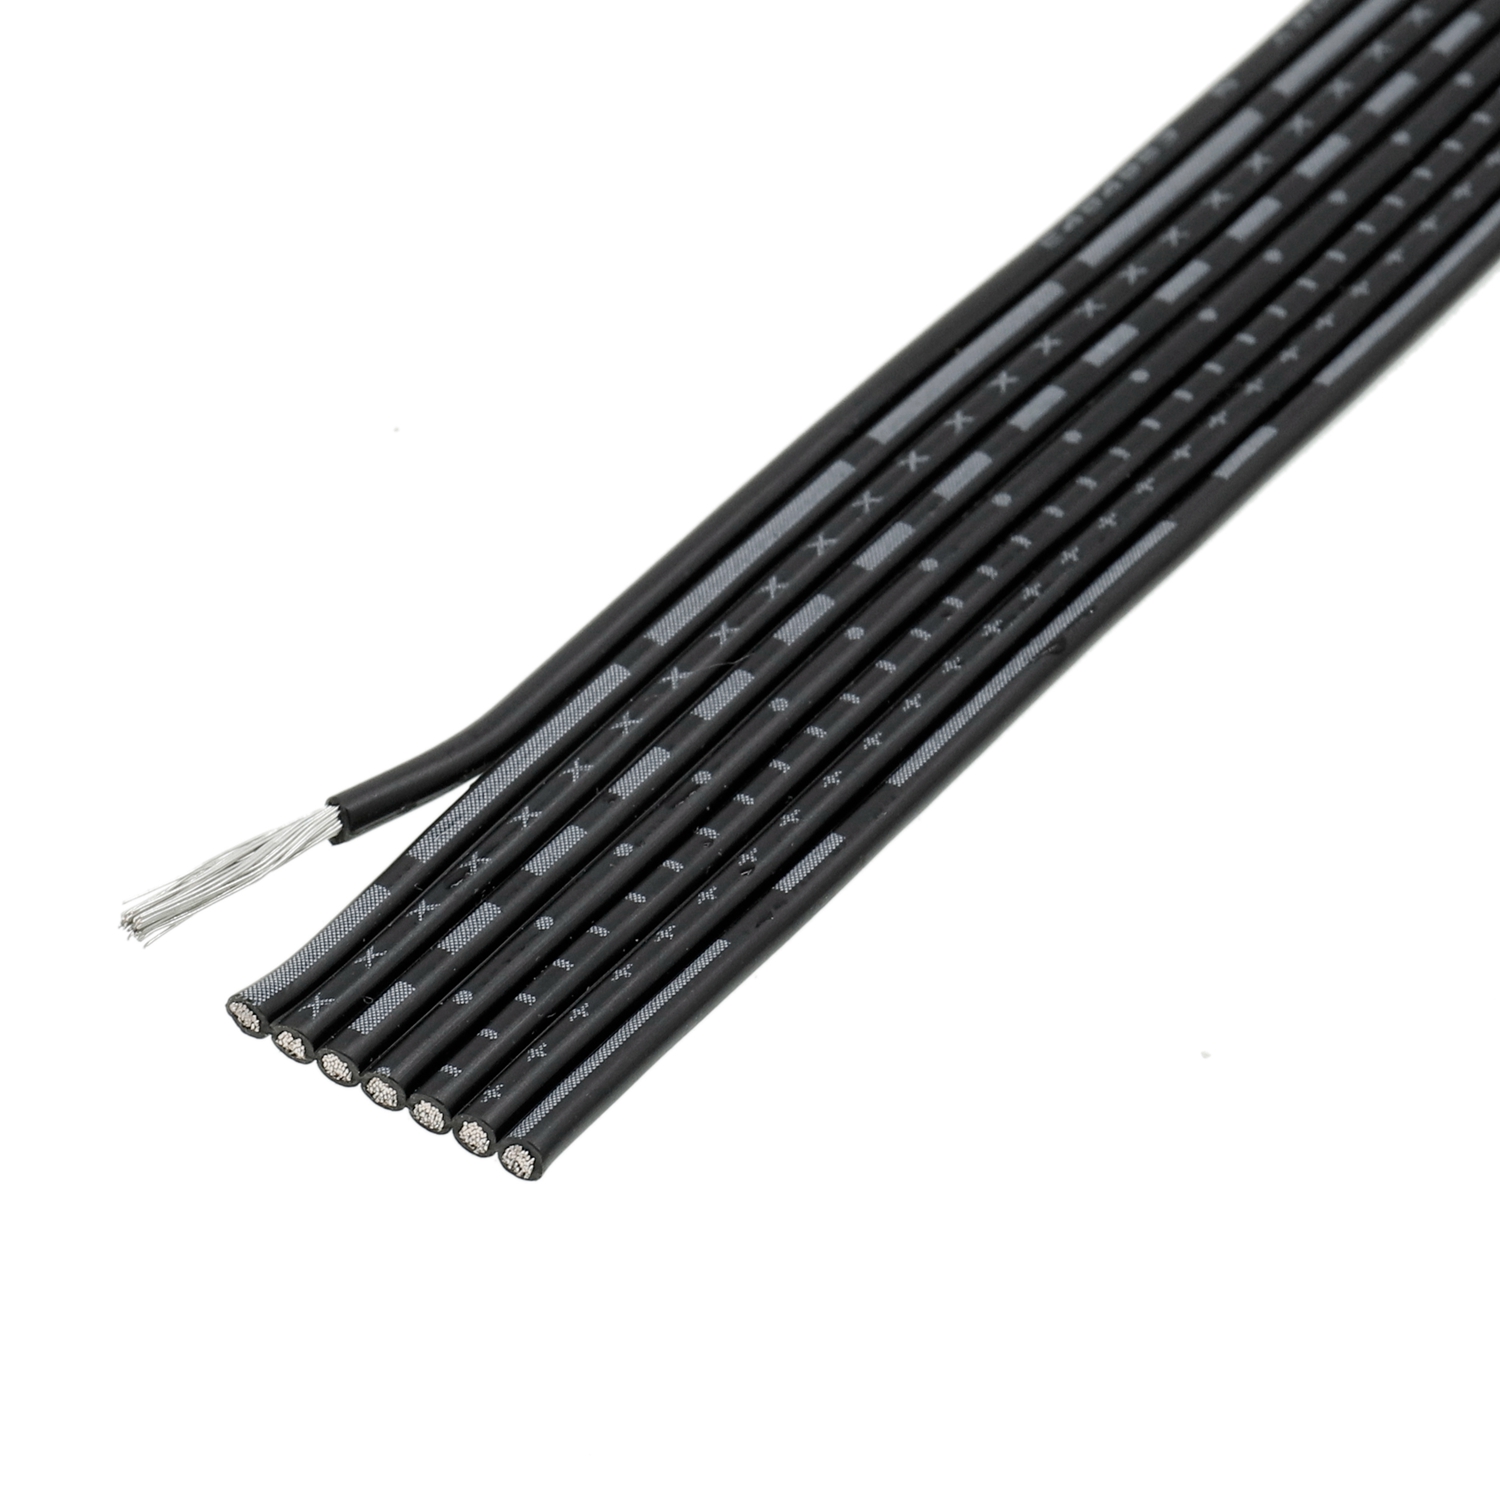 Flat Ribbon Cable UL2468